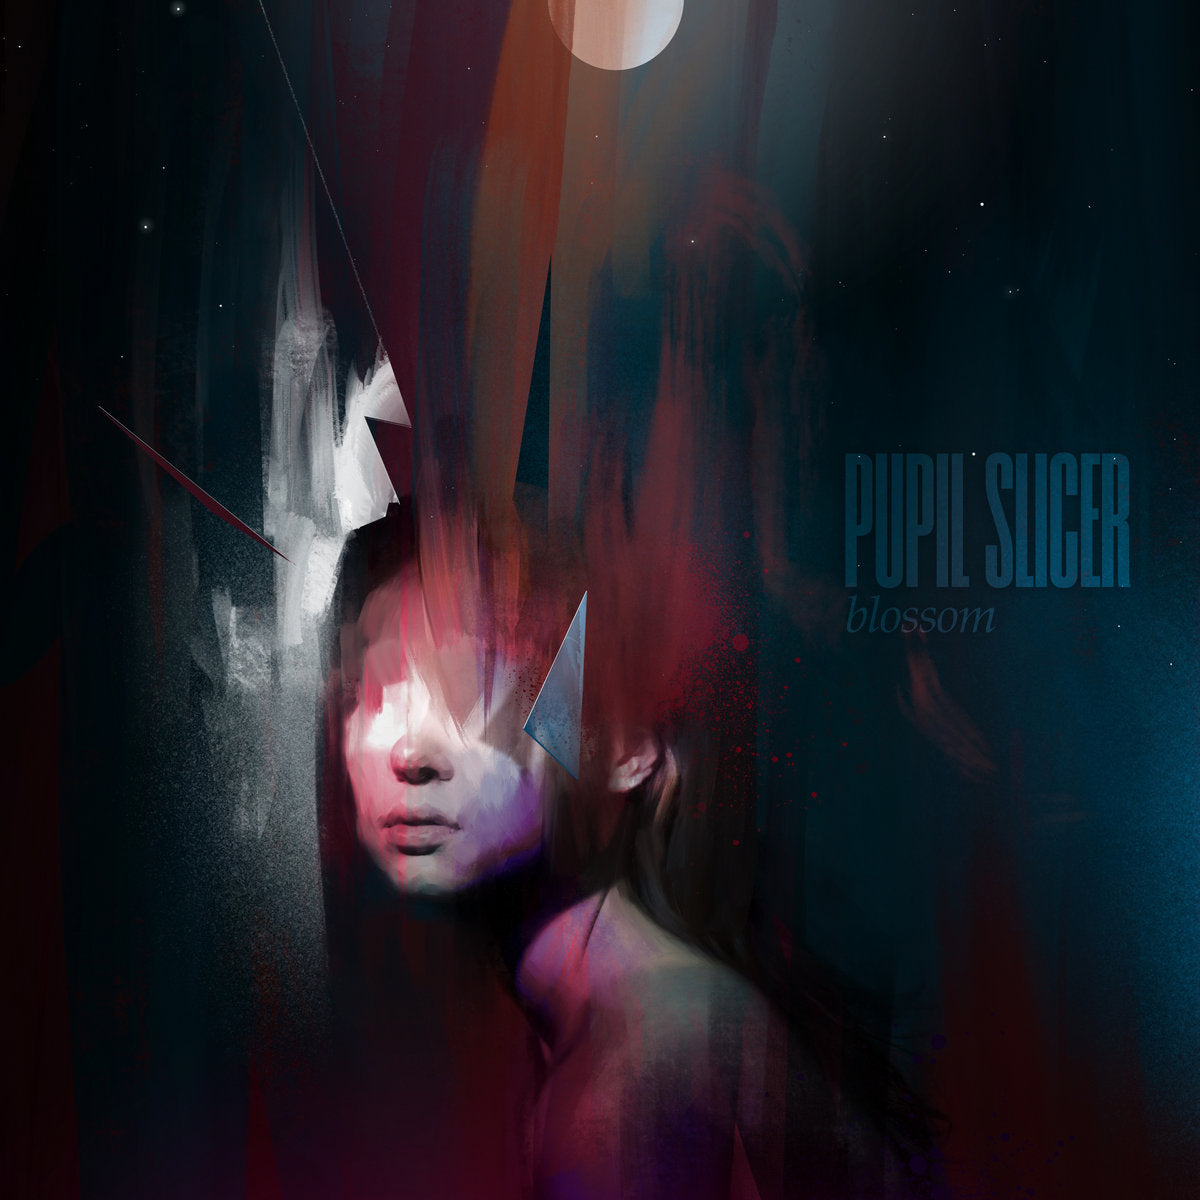 Pupil Slicer - BLOSSOM LP